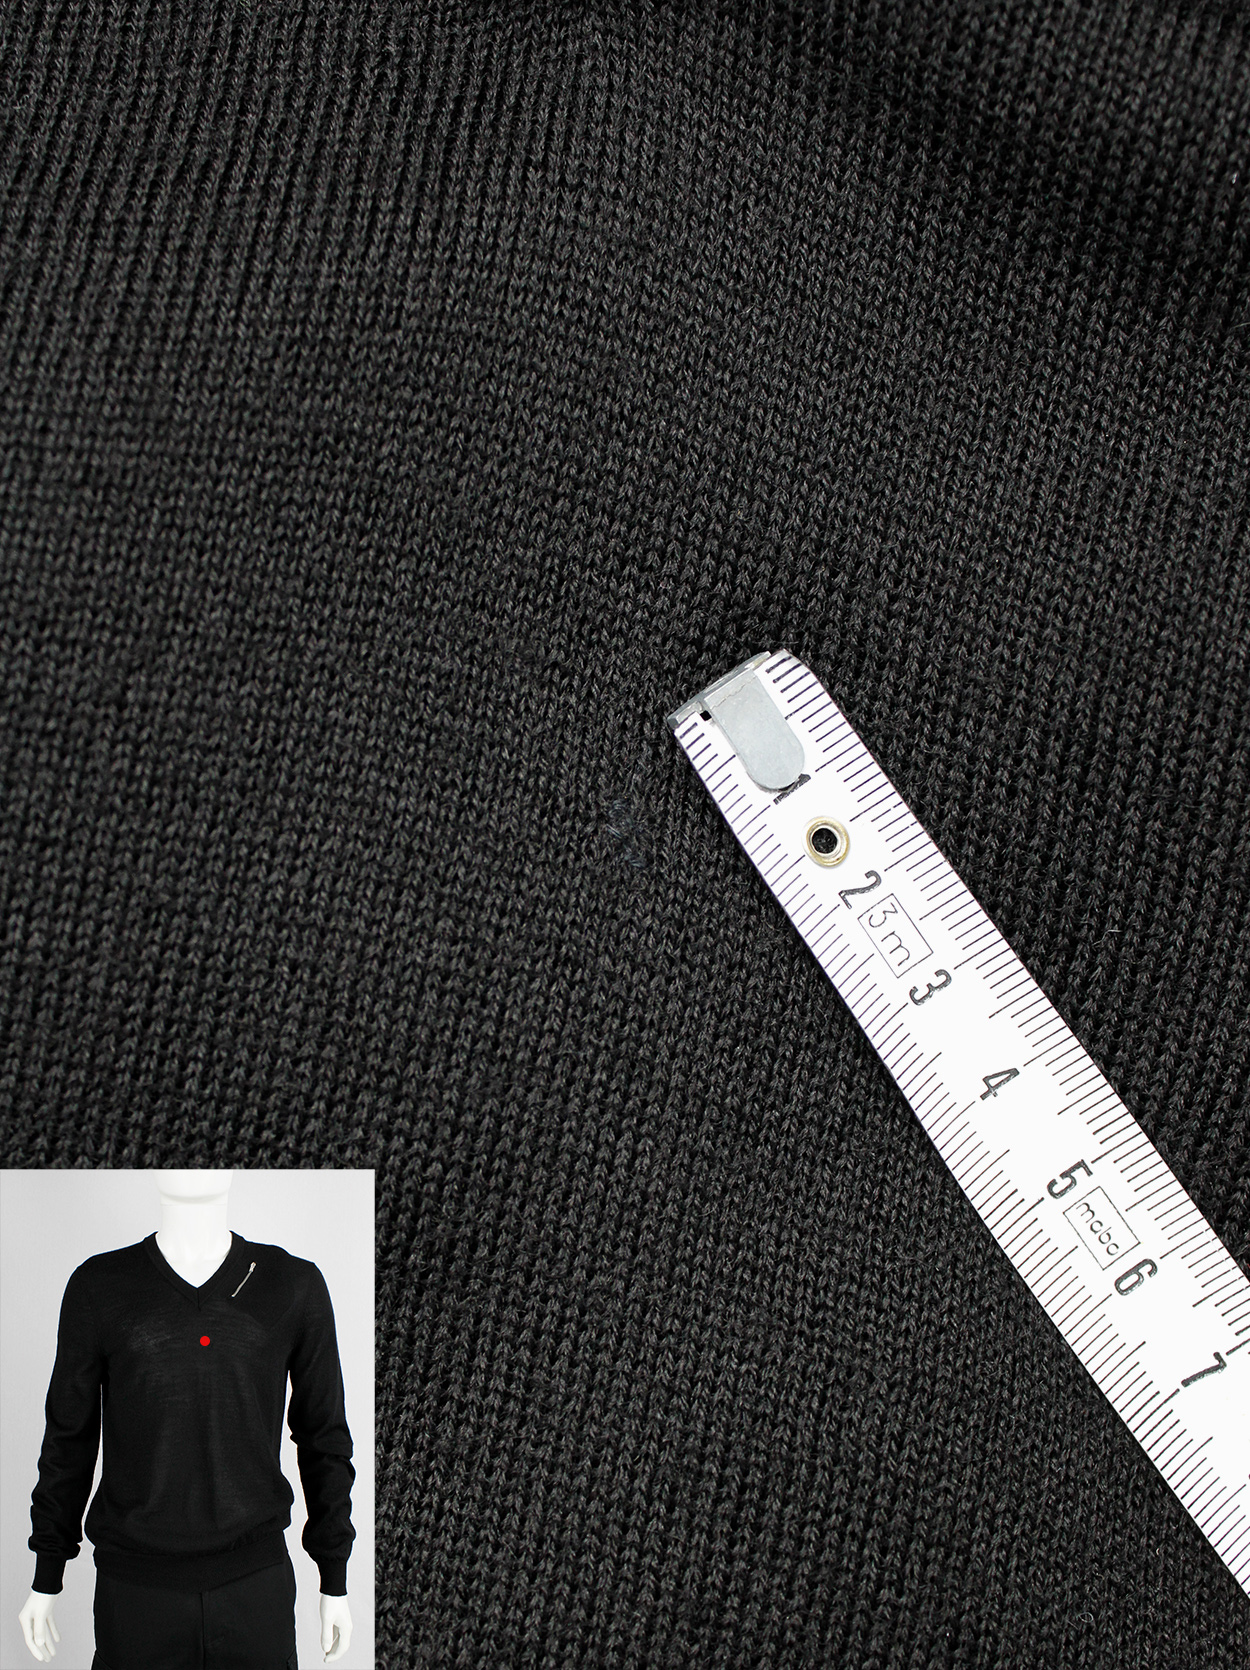 Maison Martin Margiela black jumper with slanted zipper pocket at the ...